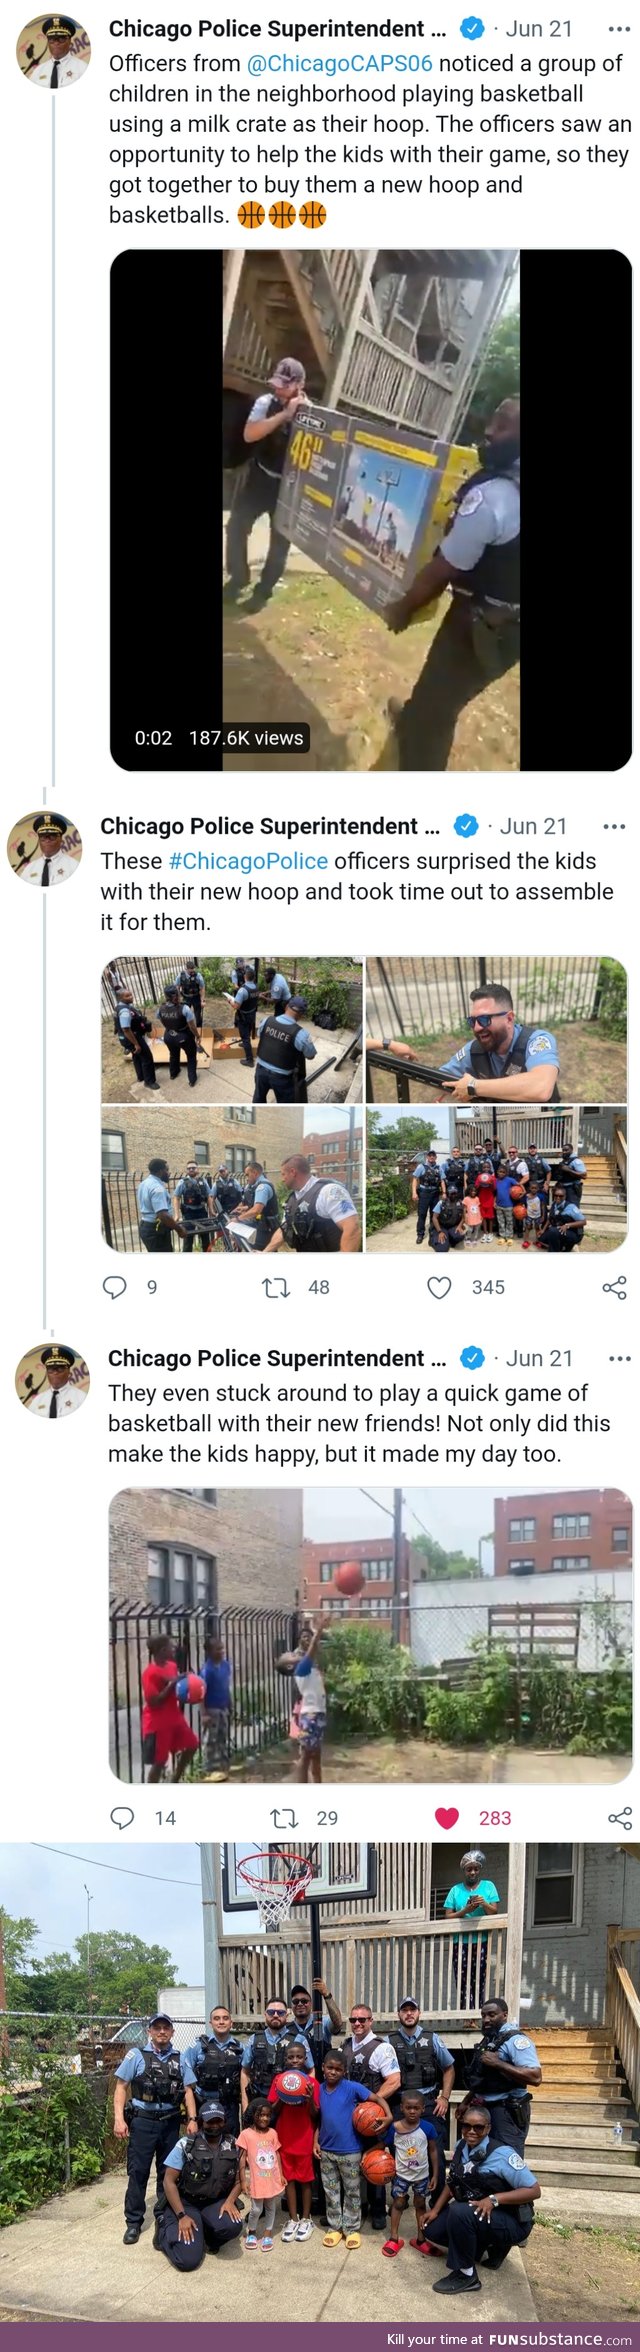 Chicago Police Buy Kids a Basketball hoop (FeelGoodSubstance)